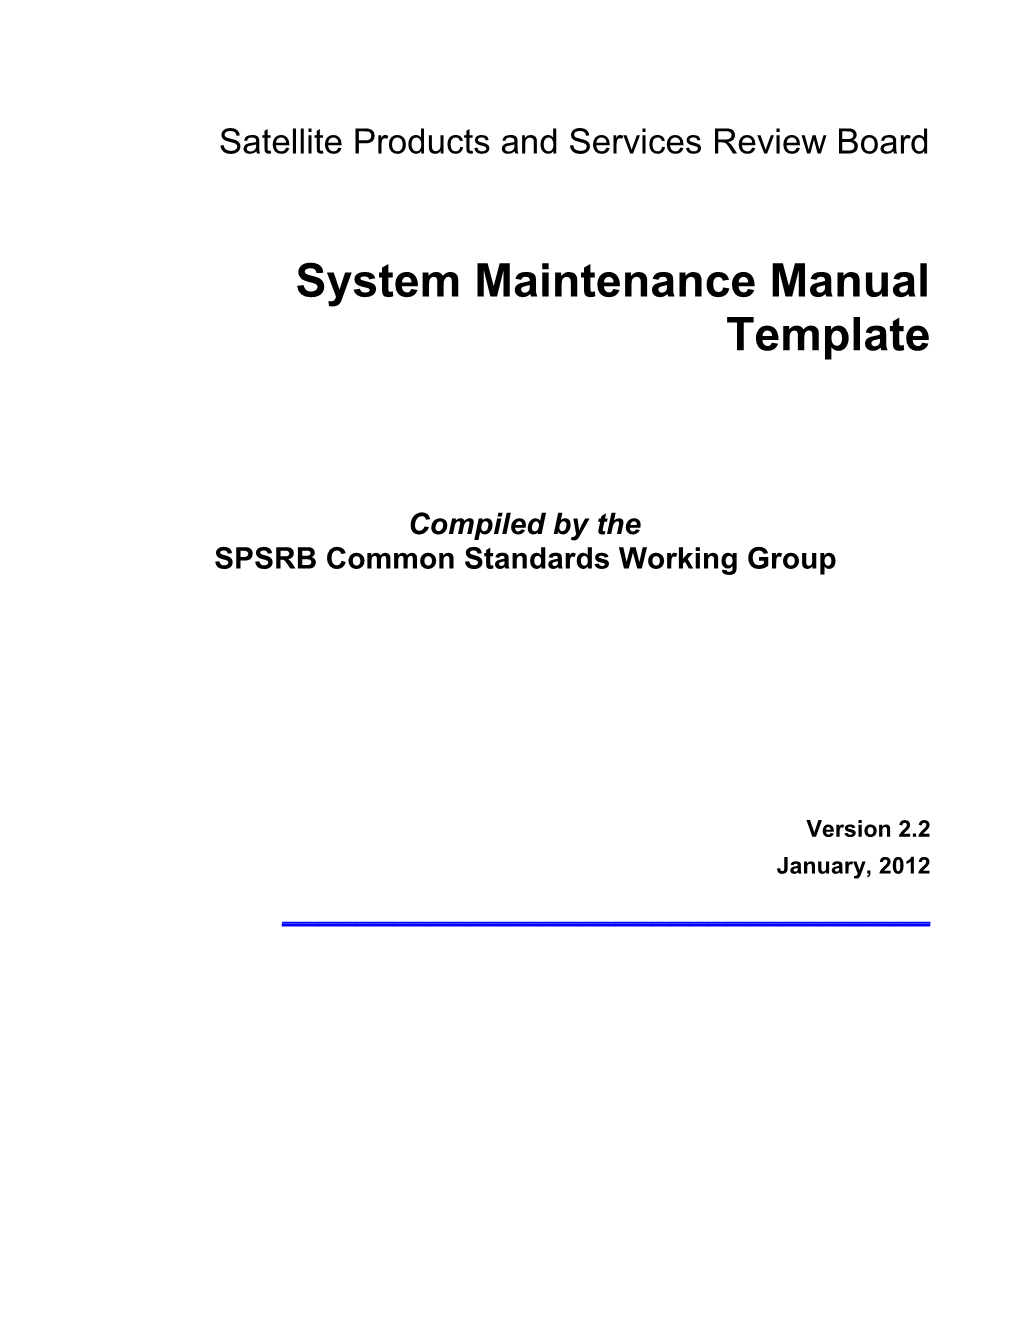 System Maintenance Manual